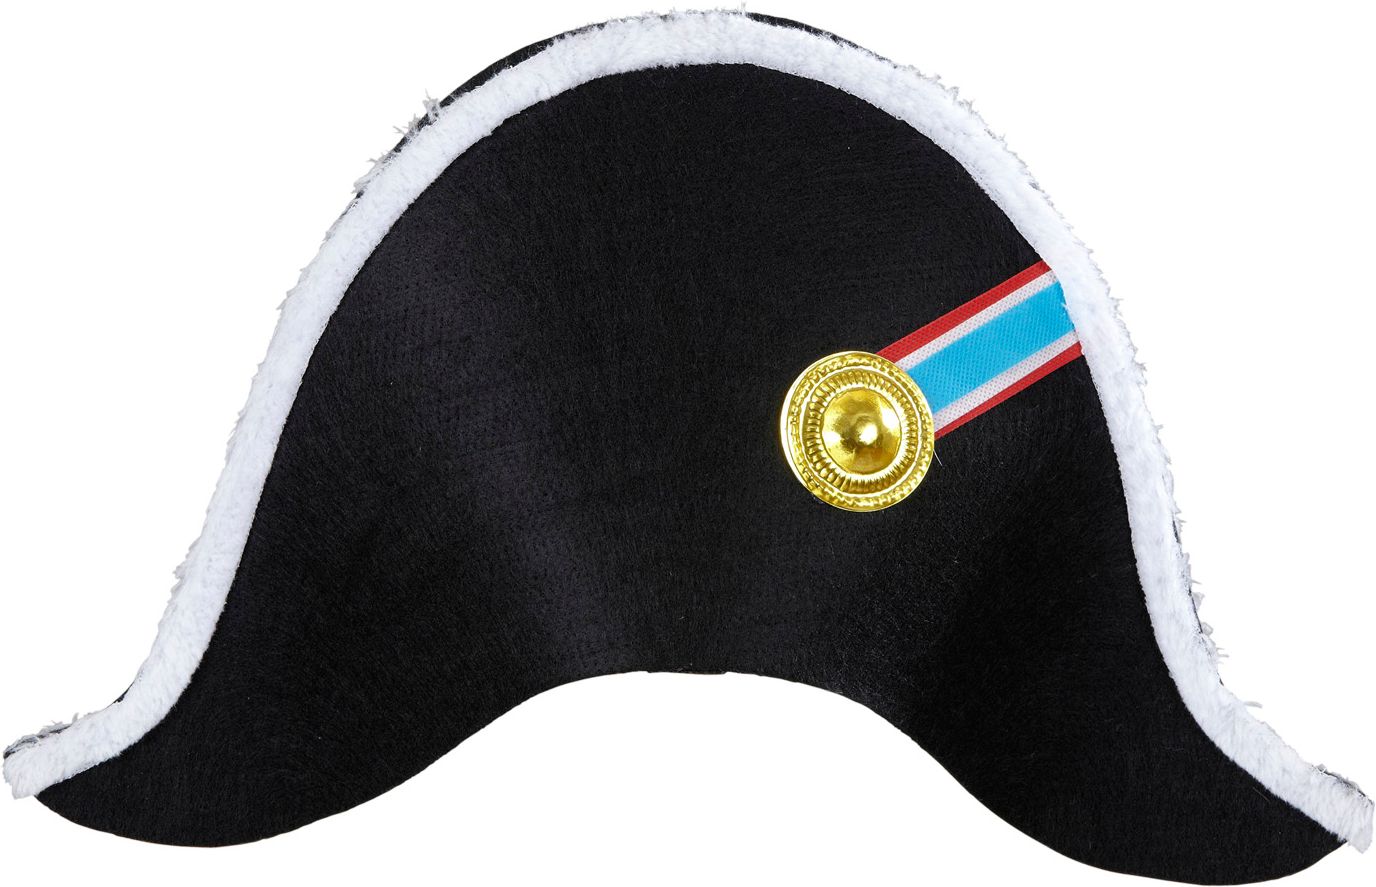 Napoleon bicorn generaal hoed